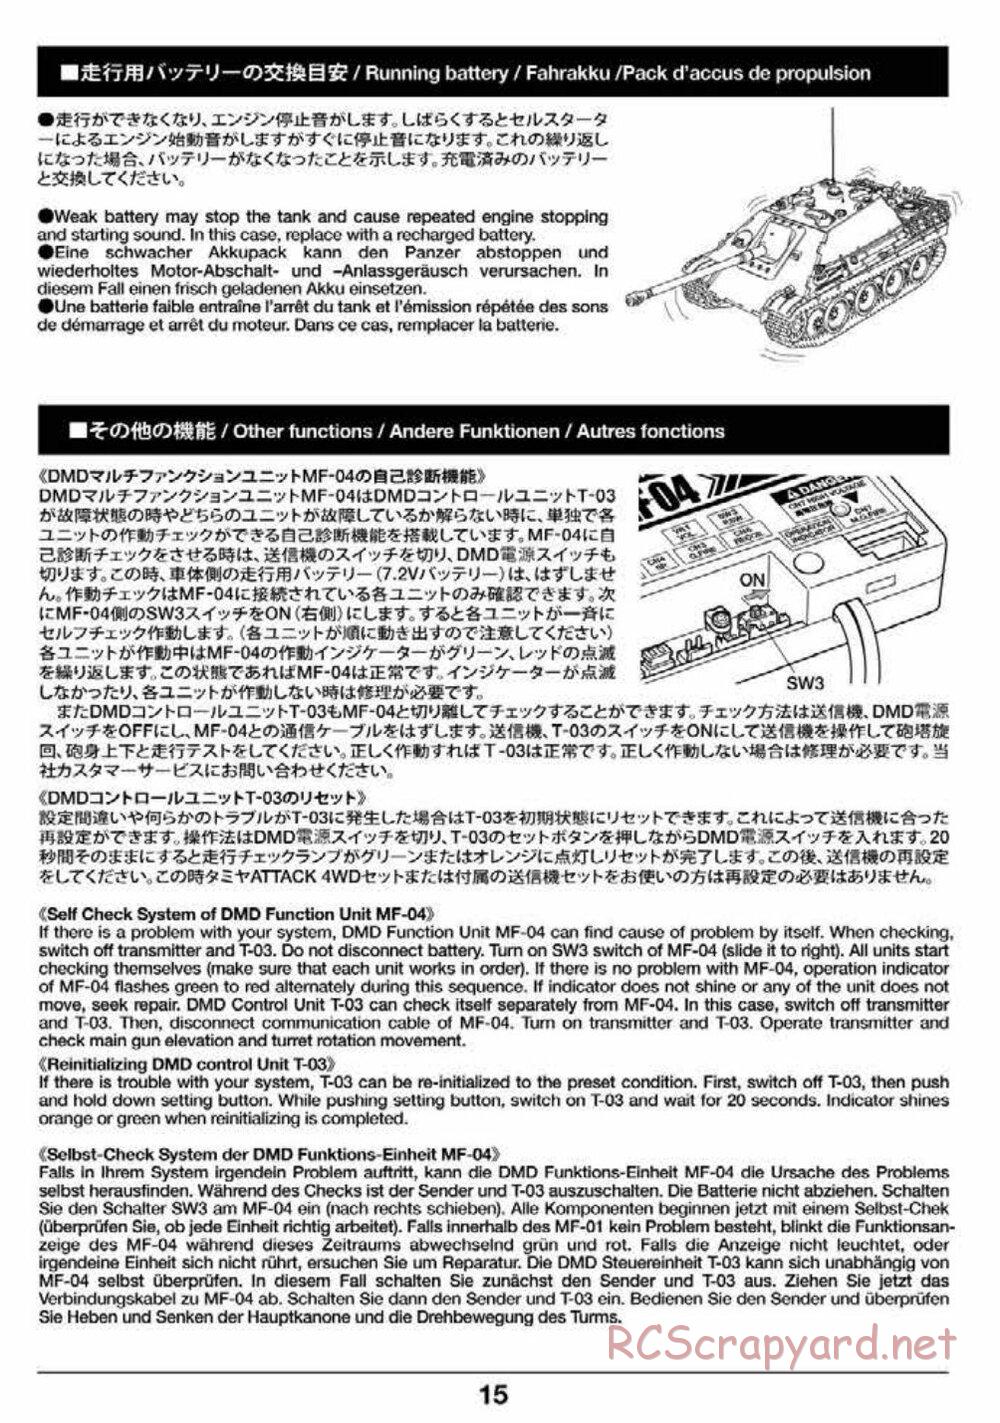 Tamiya - Jagdpanther - 1/16 Scale Chassis - Operation Manual - Page 15